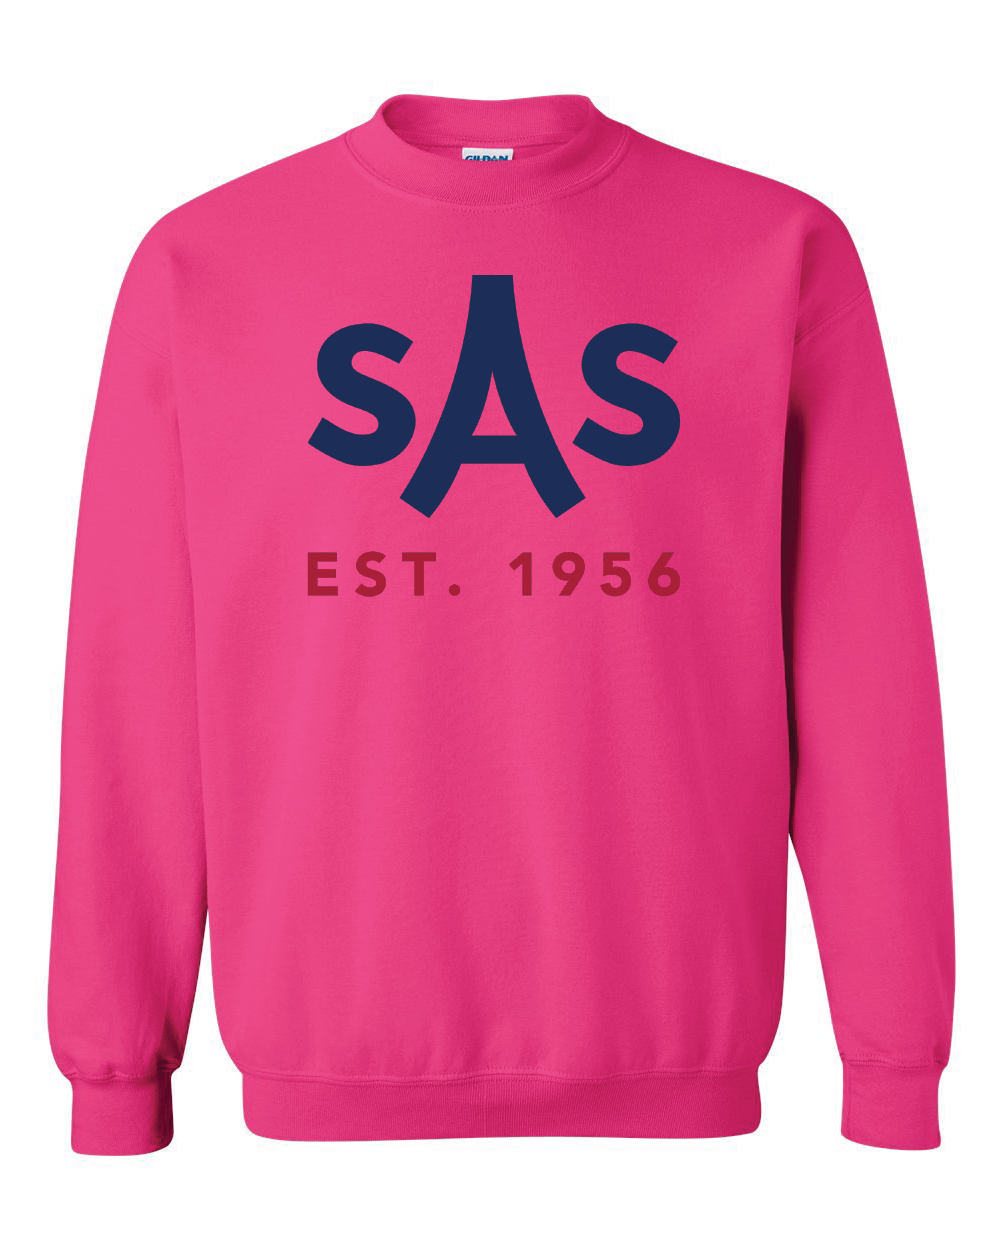 SAS Color Acronym Crewneck Sweatshirt